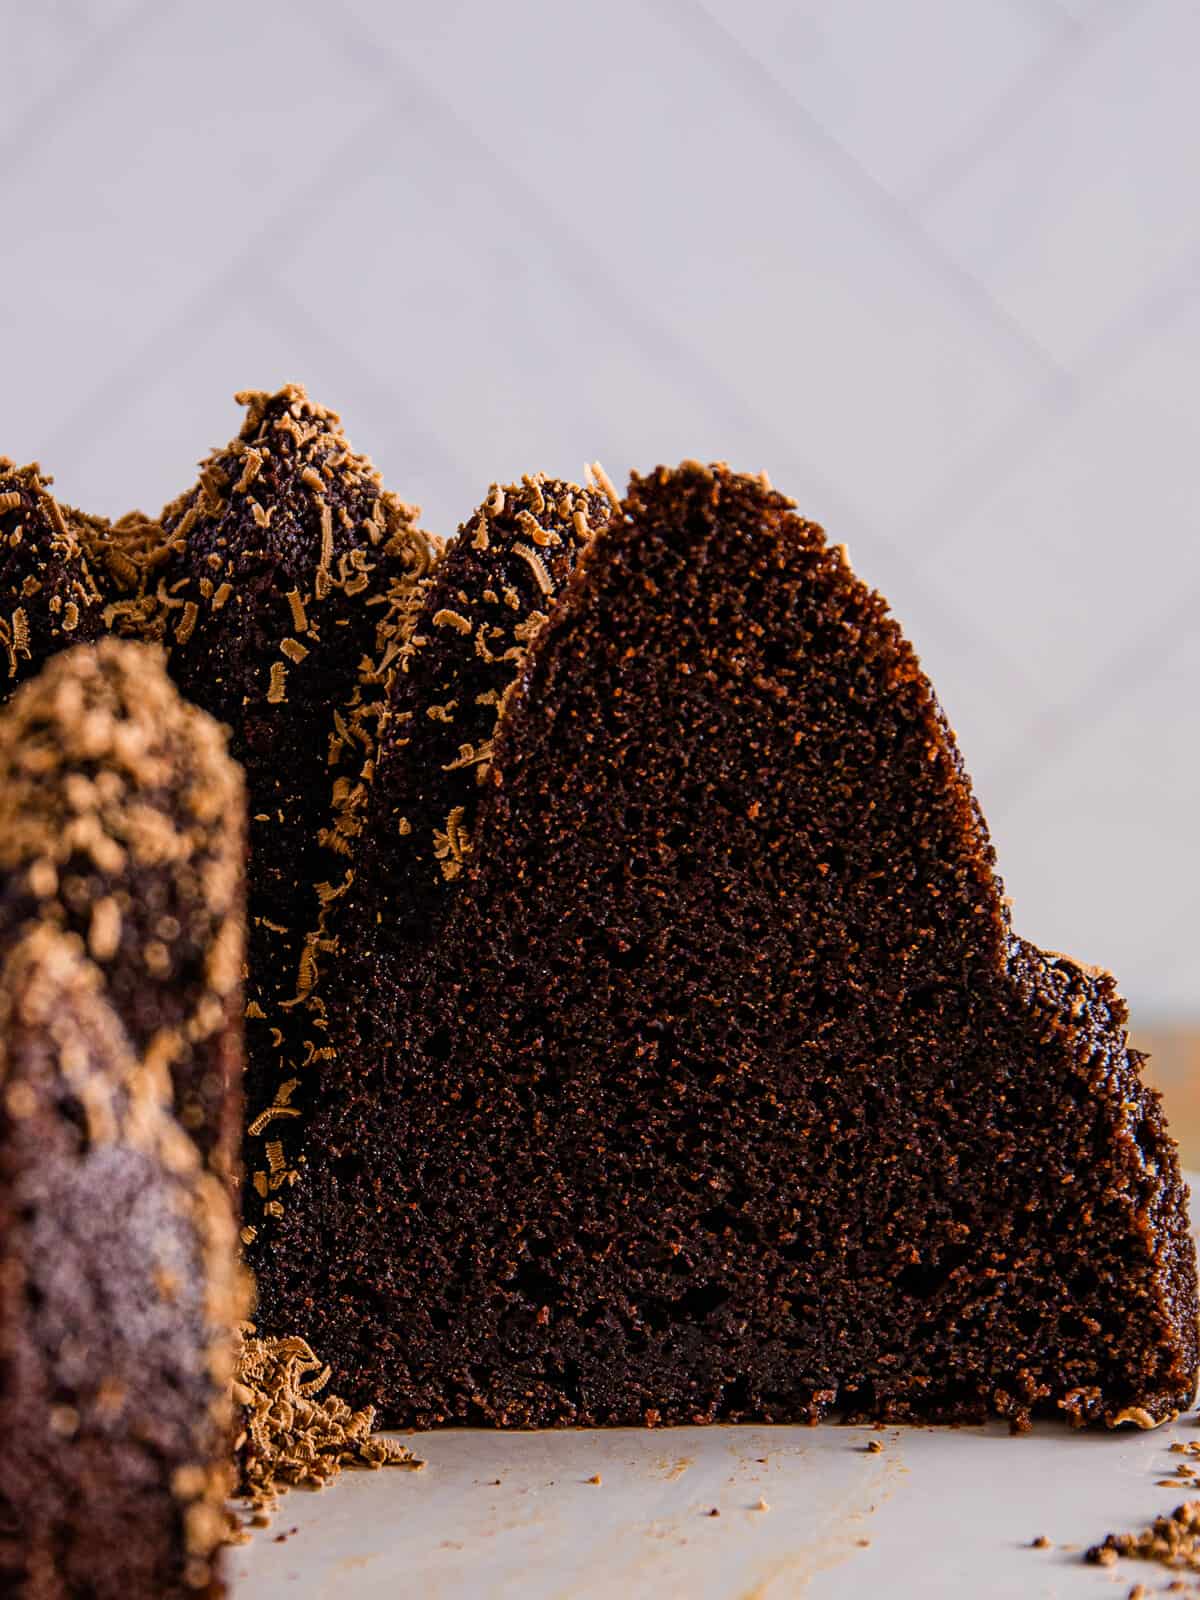 Cross section slice of chocolate cake.